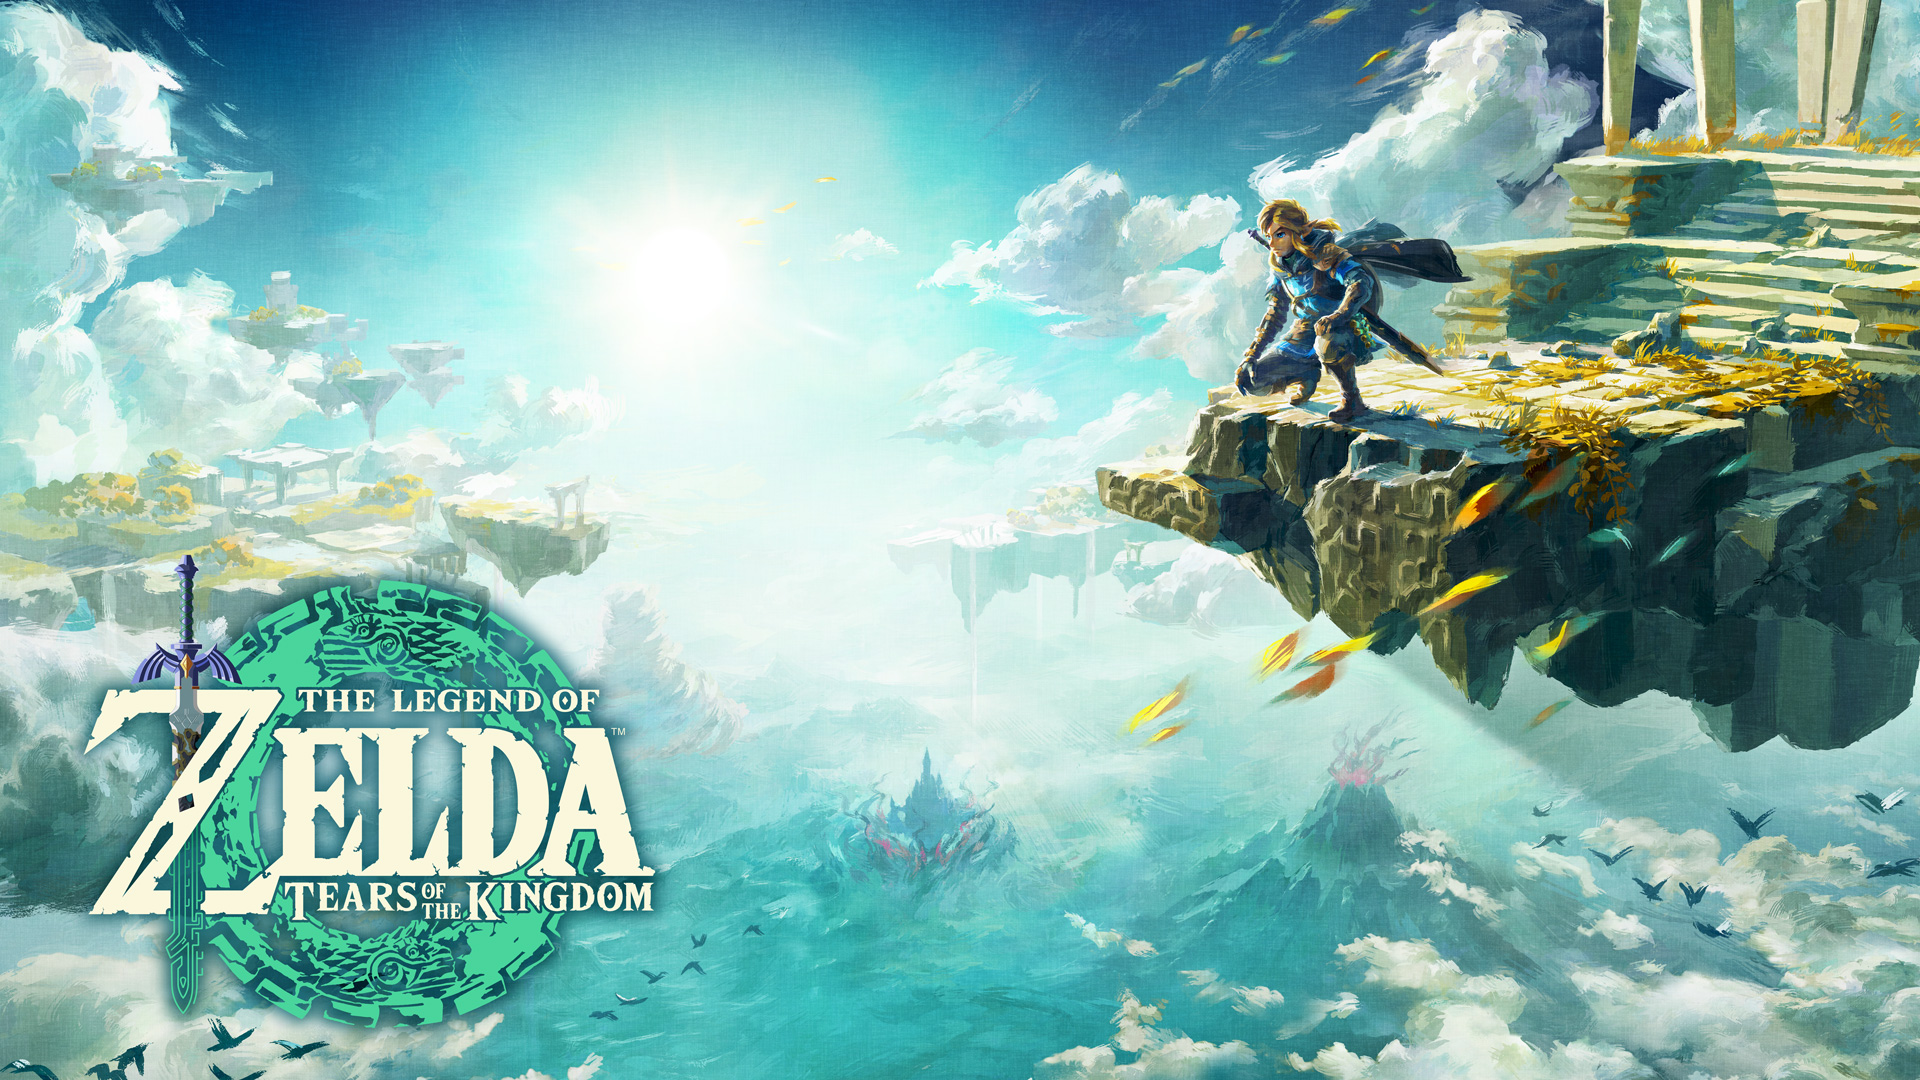 Legend of Zelda, Video Game Collections